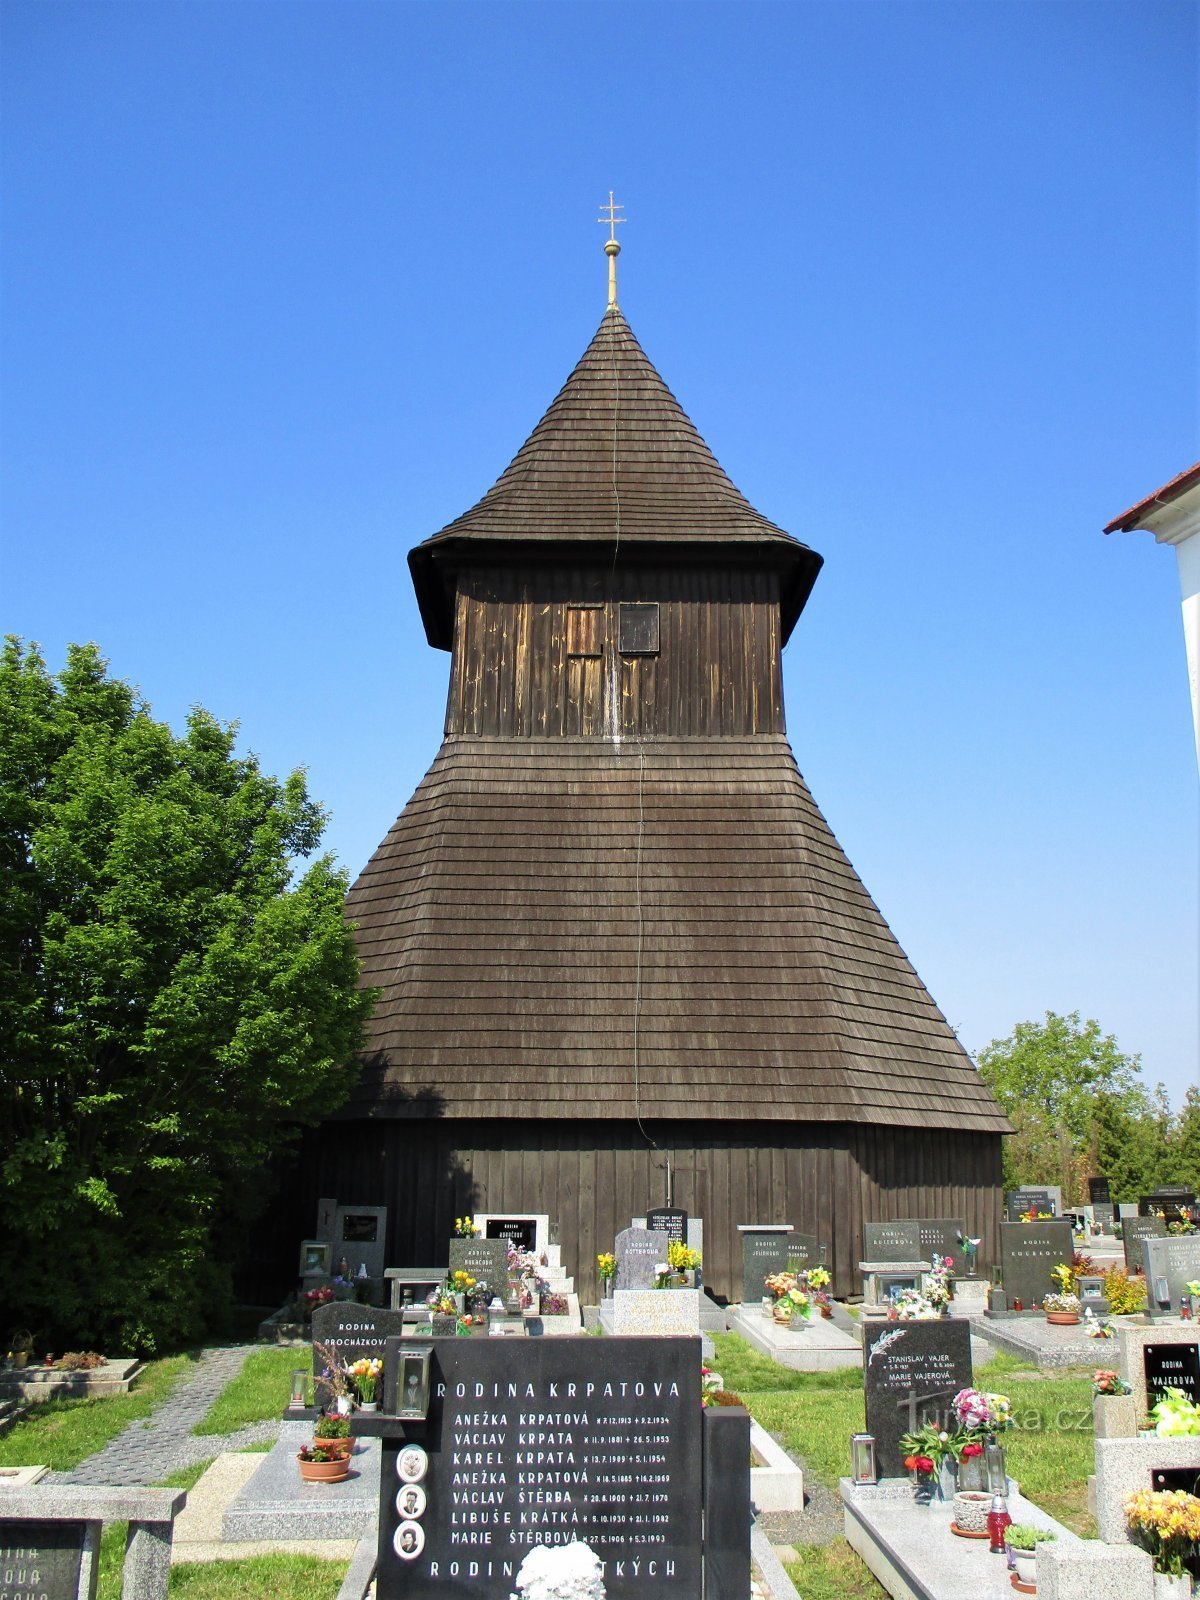 Campanile della chiesa di S. Venceslao (Horní Ředice, 16.5.2020/XNUMX/XNUMX)